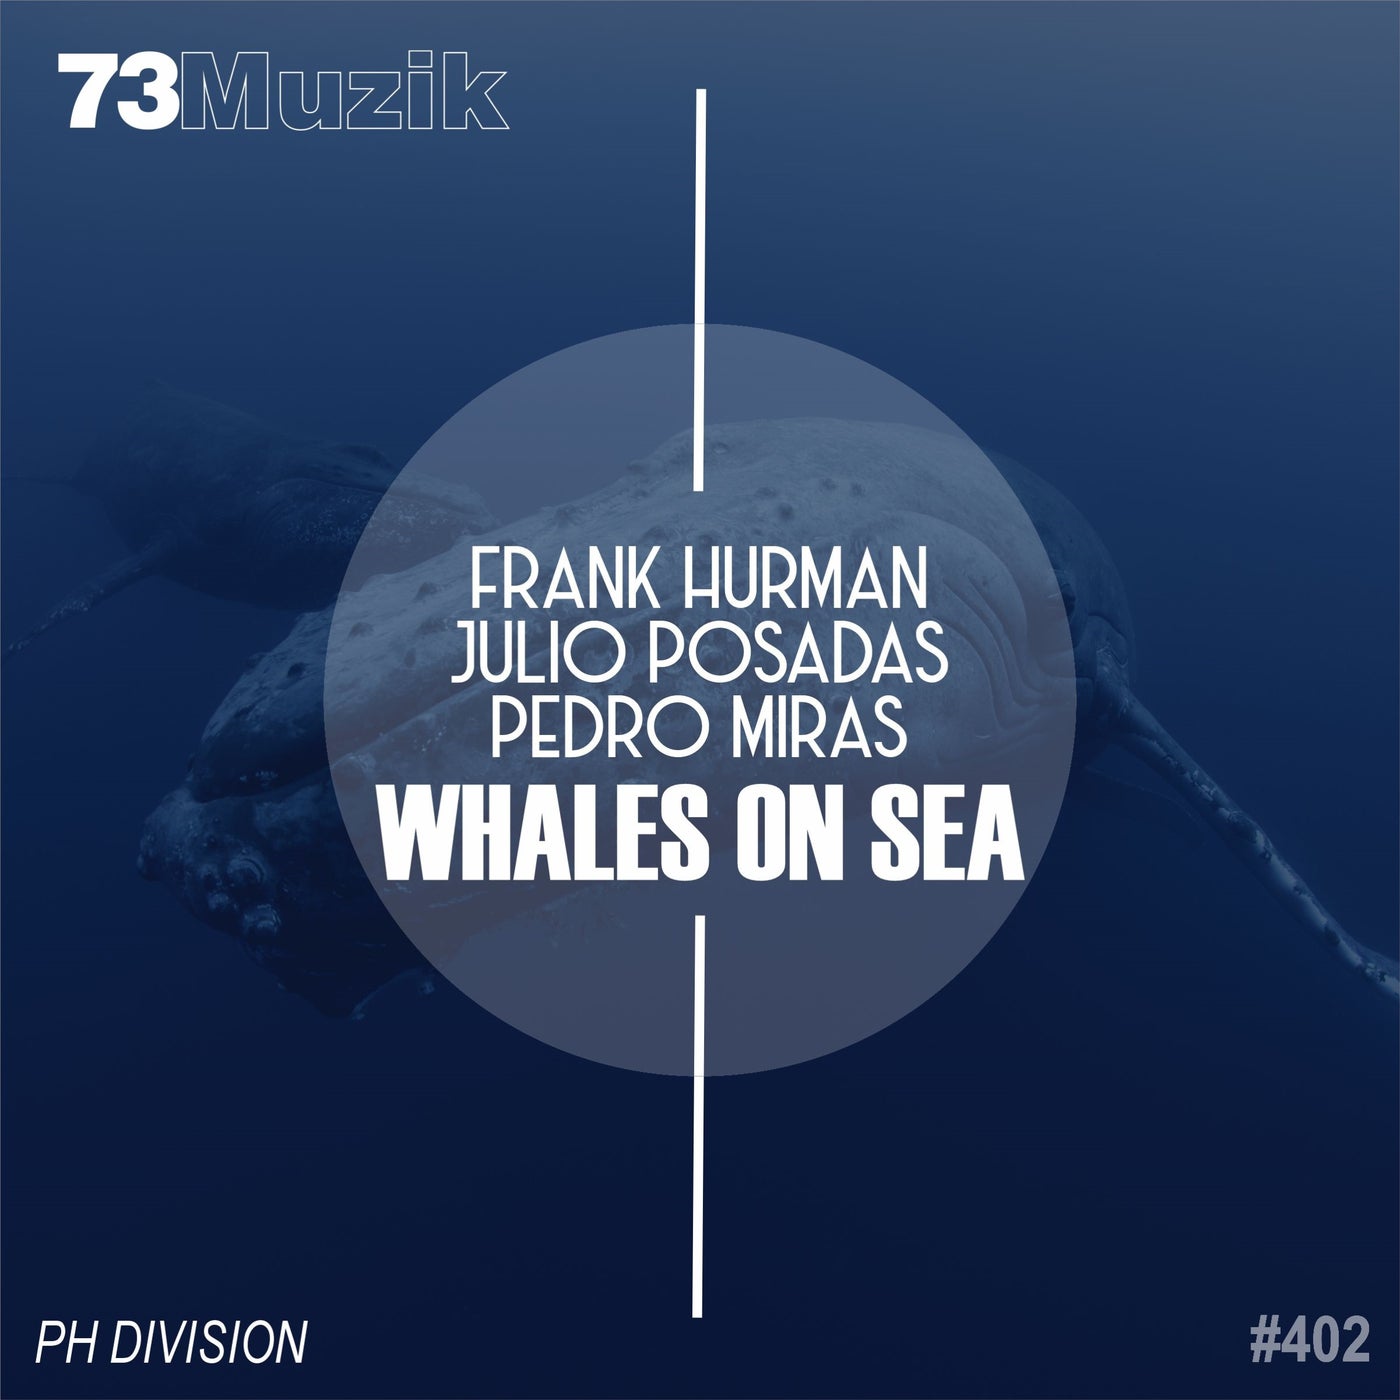 Ready go to ... https://www.beatport.com/release/whales-on-sea/4104125 [ Julio Posadas, Frank Hurman, Pedro Miras - Whales On Sea [73 Muzik] | Music & Downloads on Beatport]